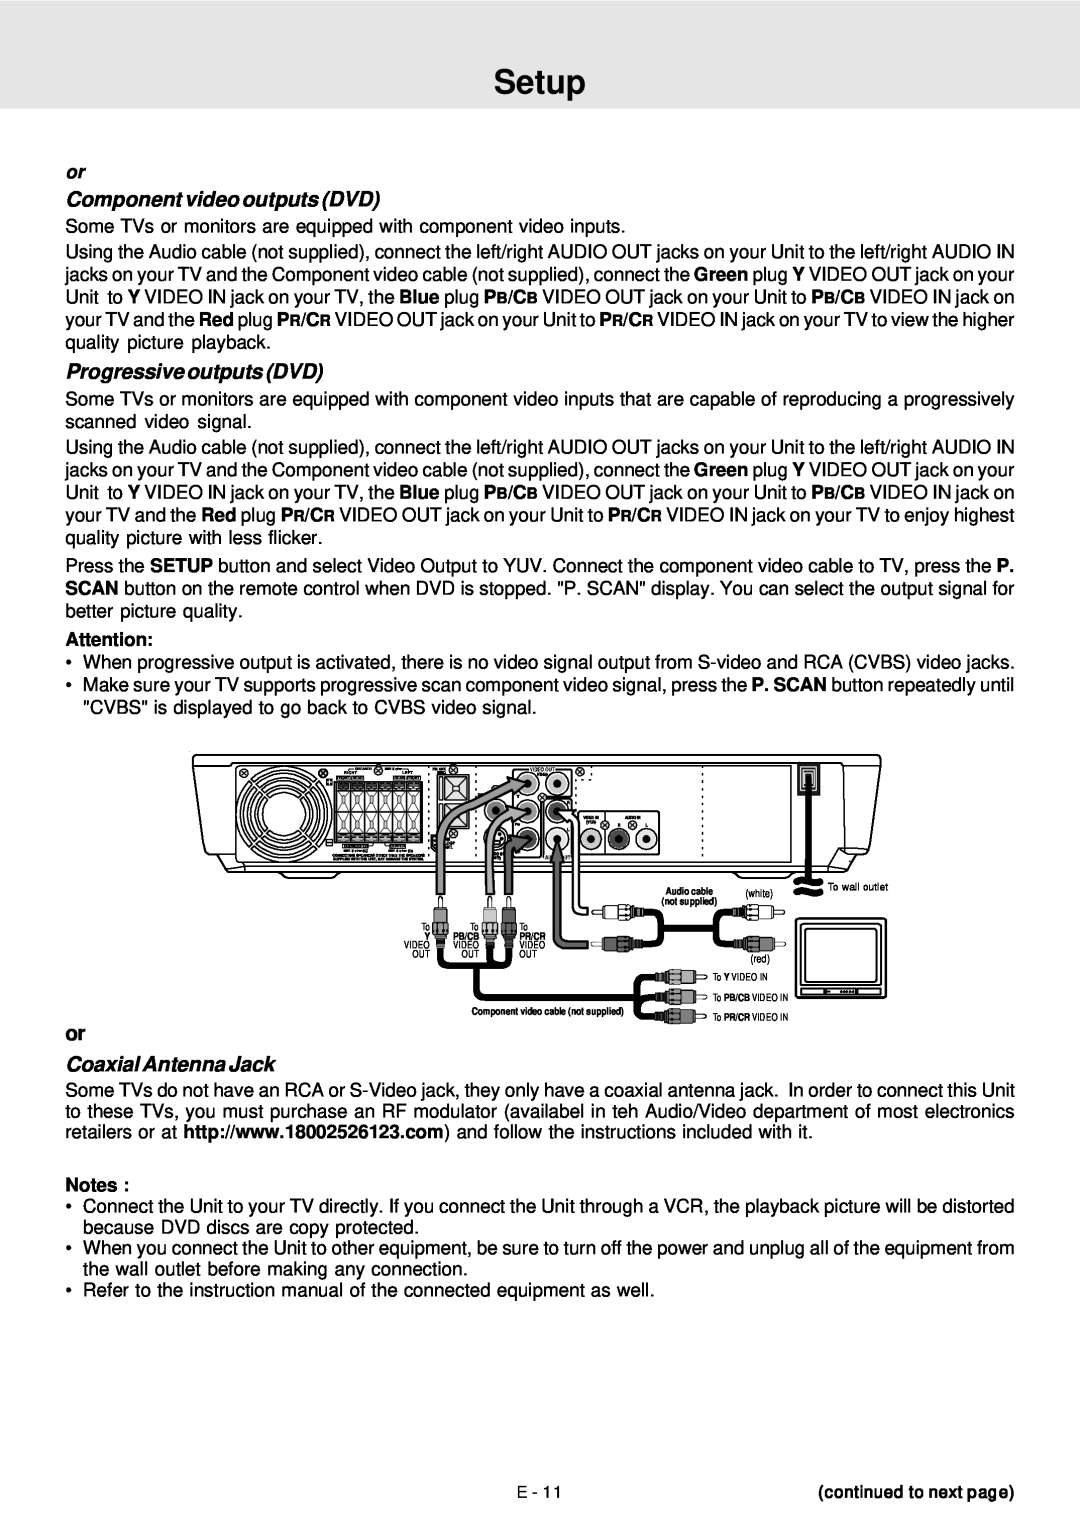 Venturer STS91 manual Setup, Component video outputs DVD, Progressive outputs DVD, Coaxial Antenna Jack 